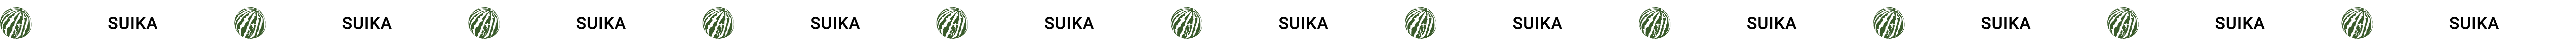 suika icon banner